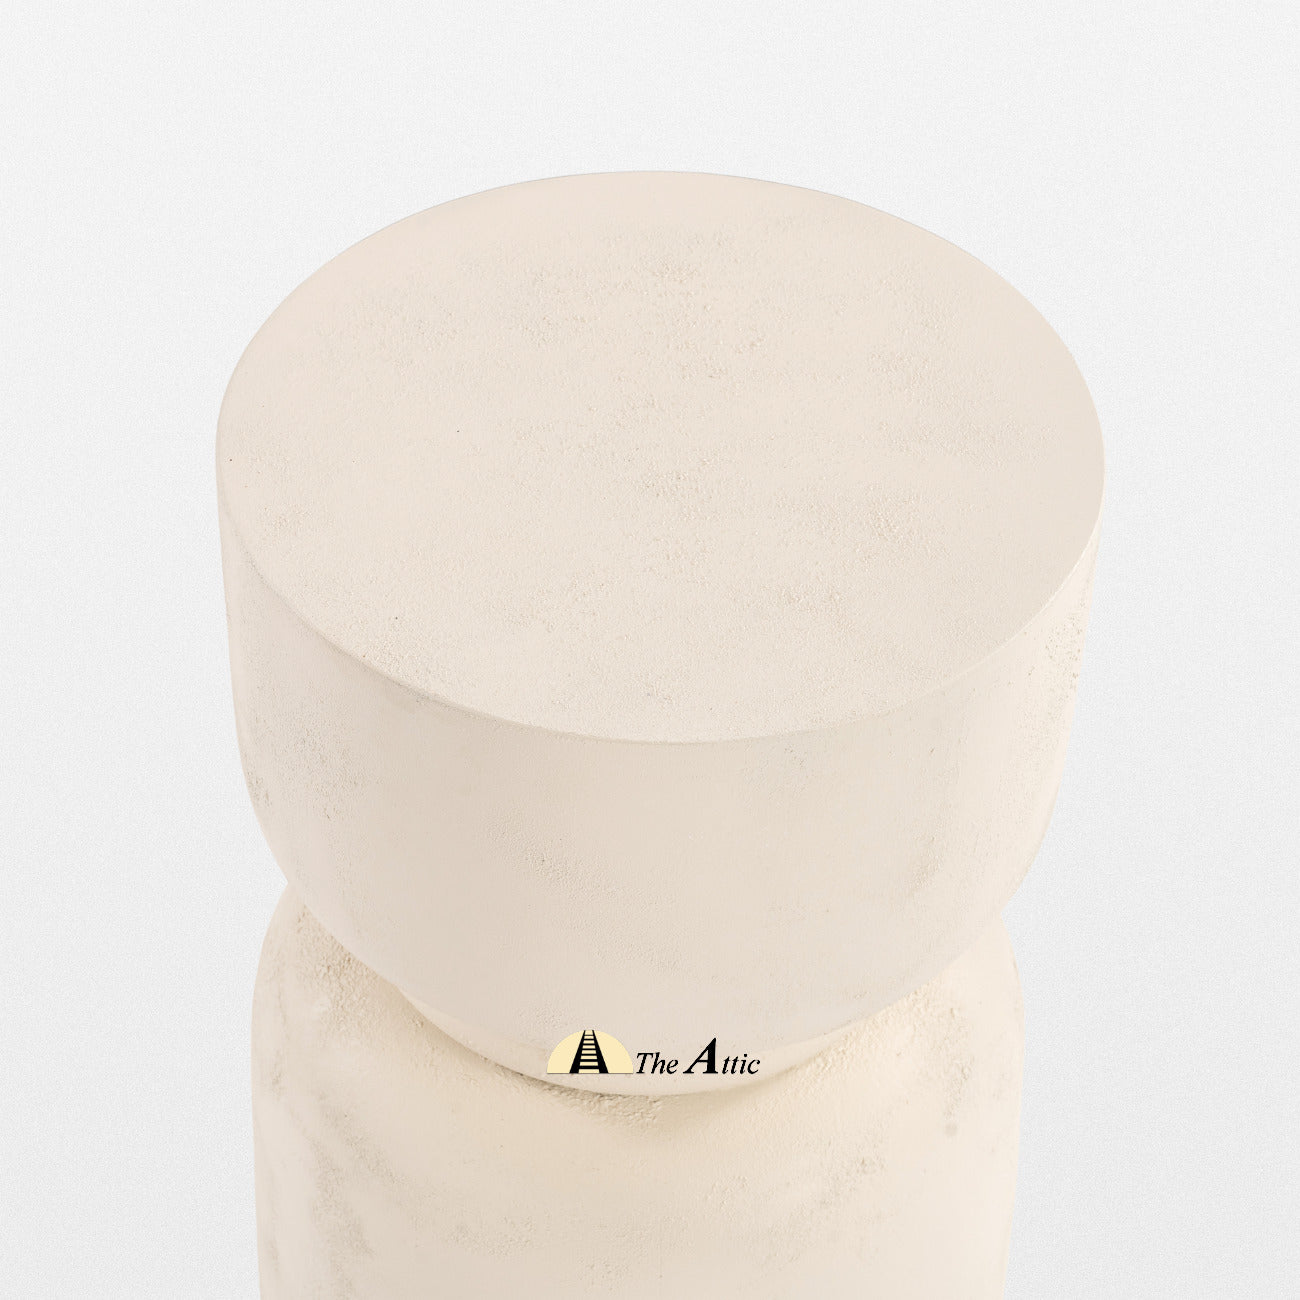 Soho Drum Solid Wood Side Table, Distressed White - The Attic Dubai